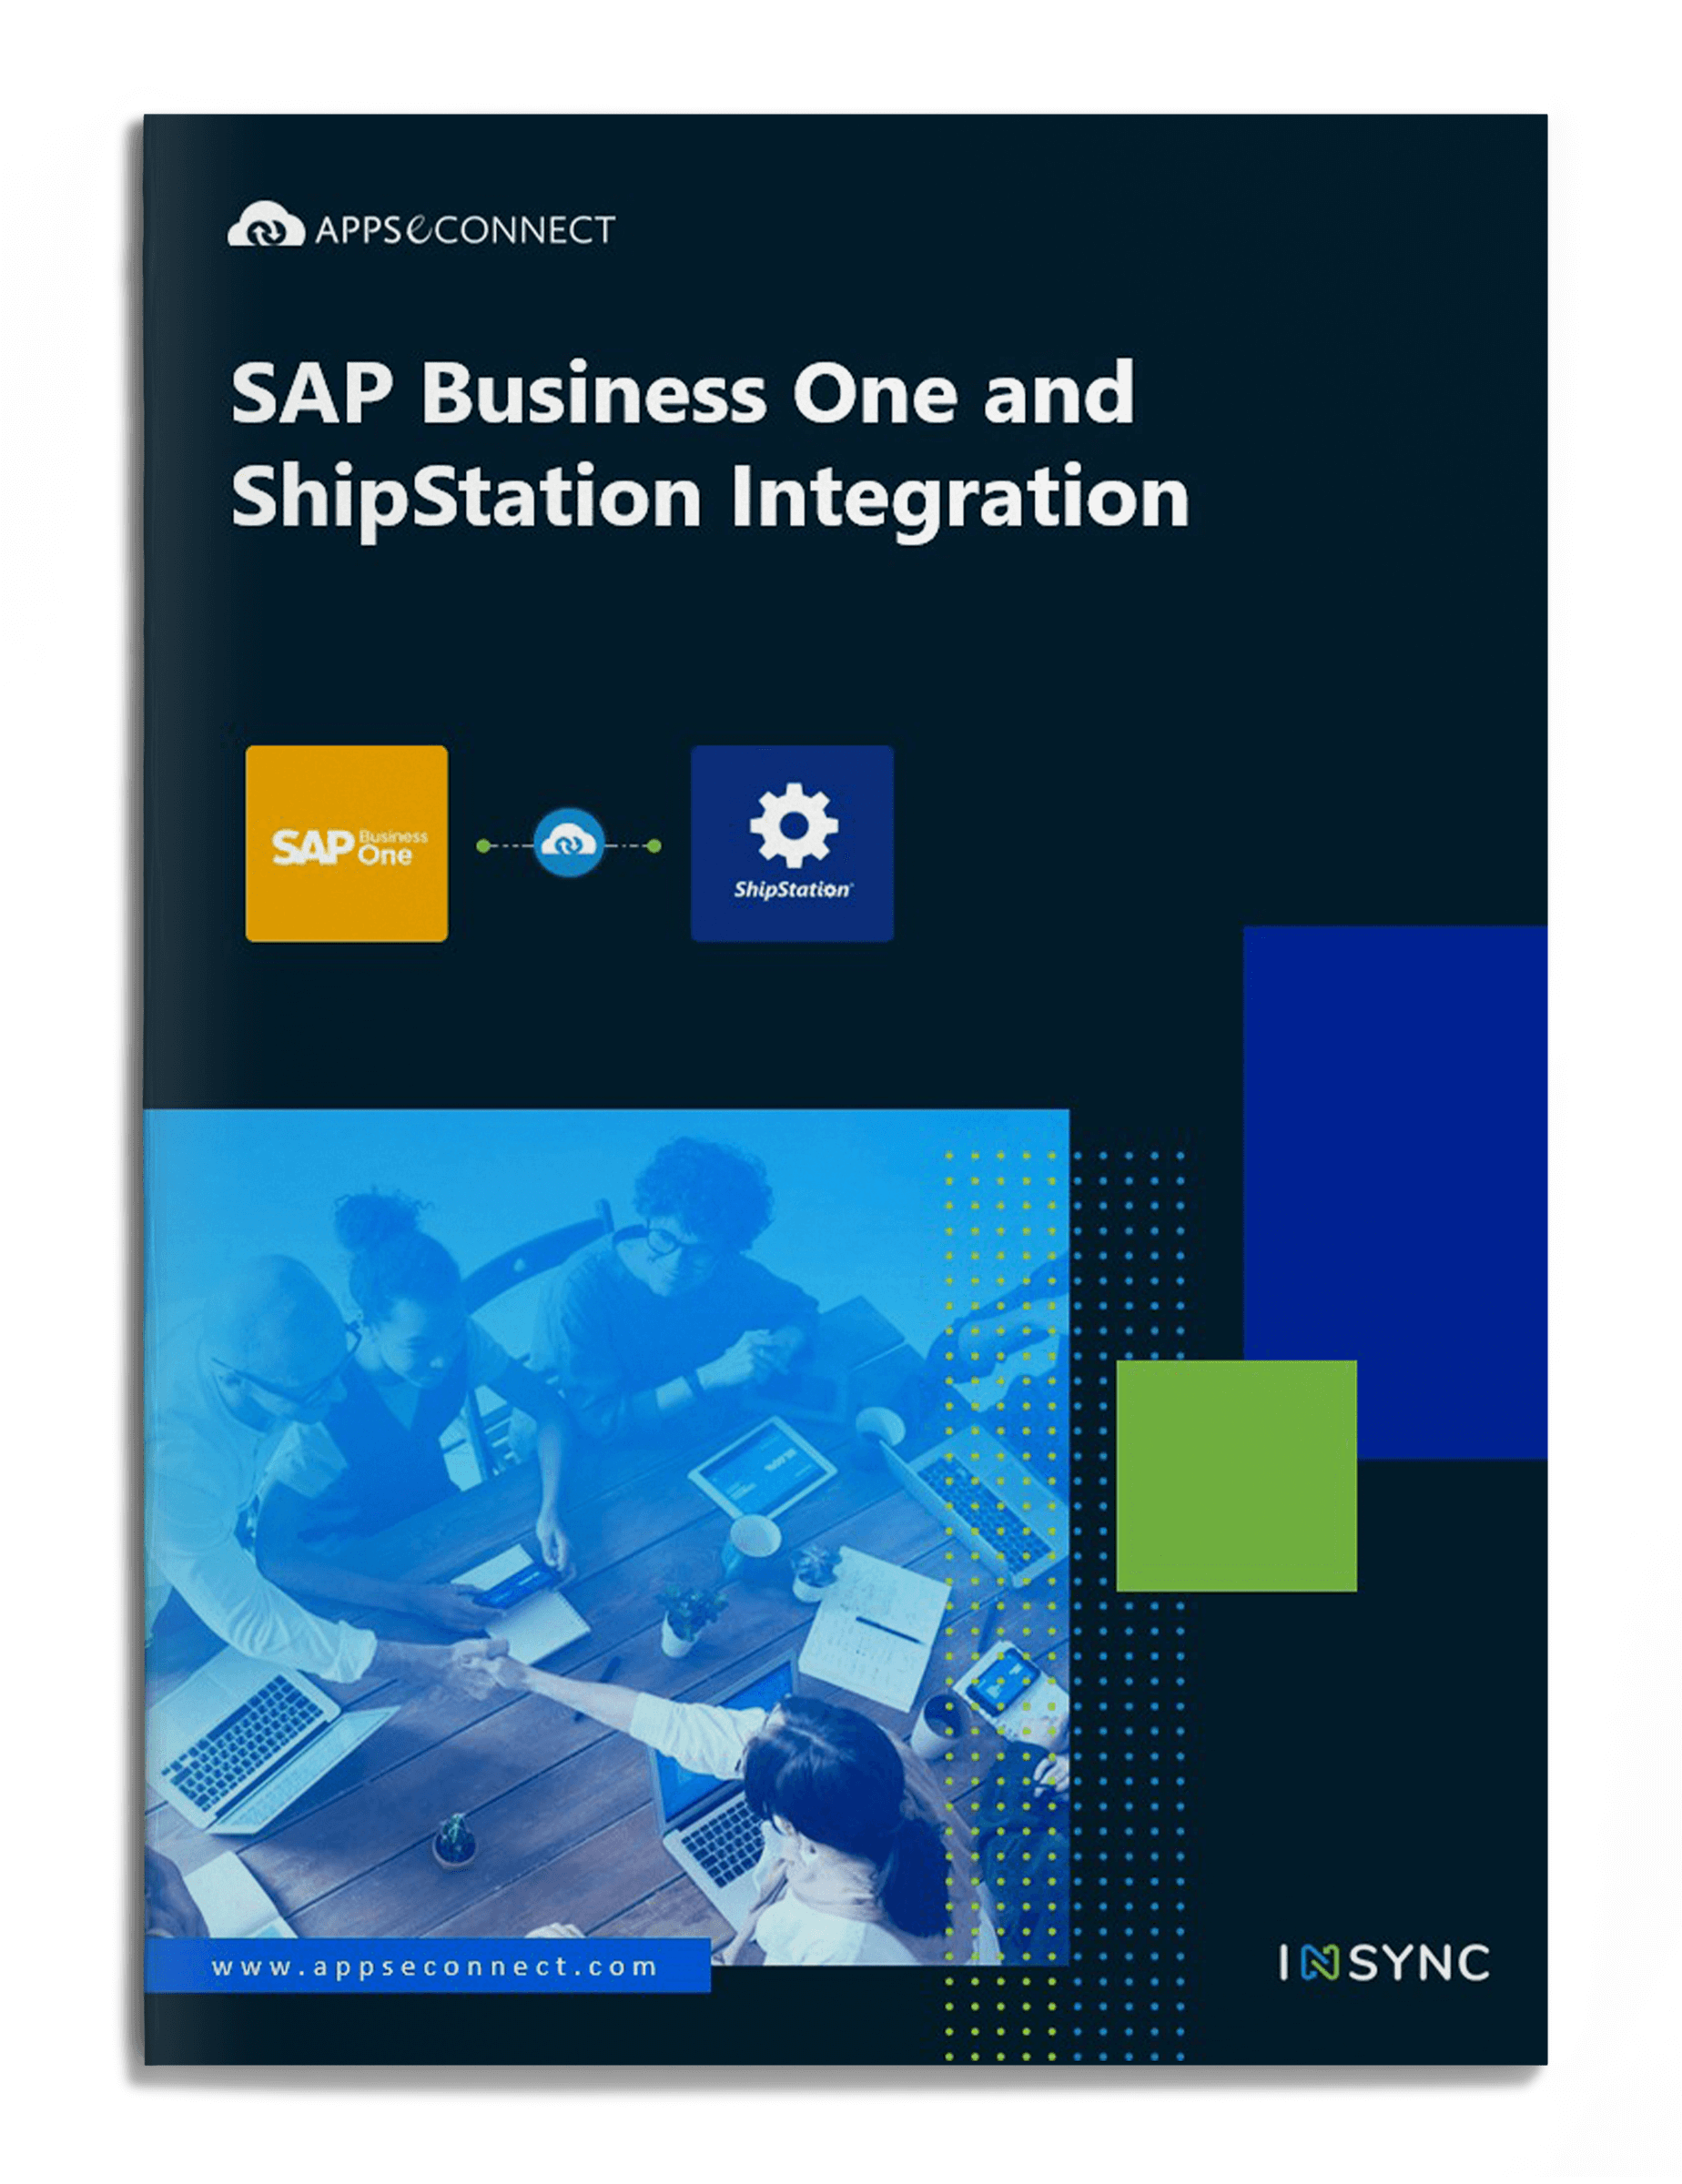 sap-business-one-shipstation-integration-brochure-cover